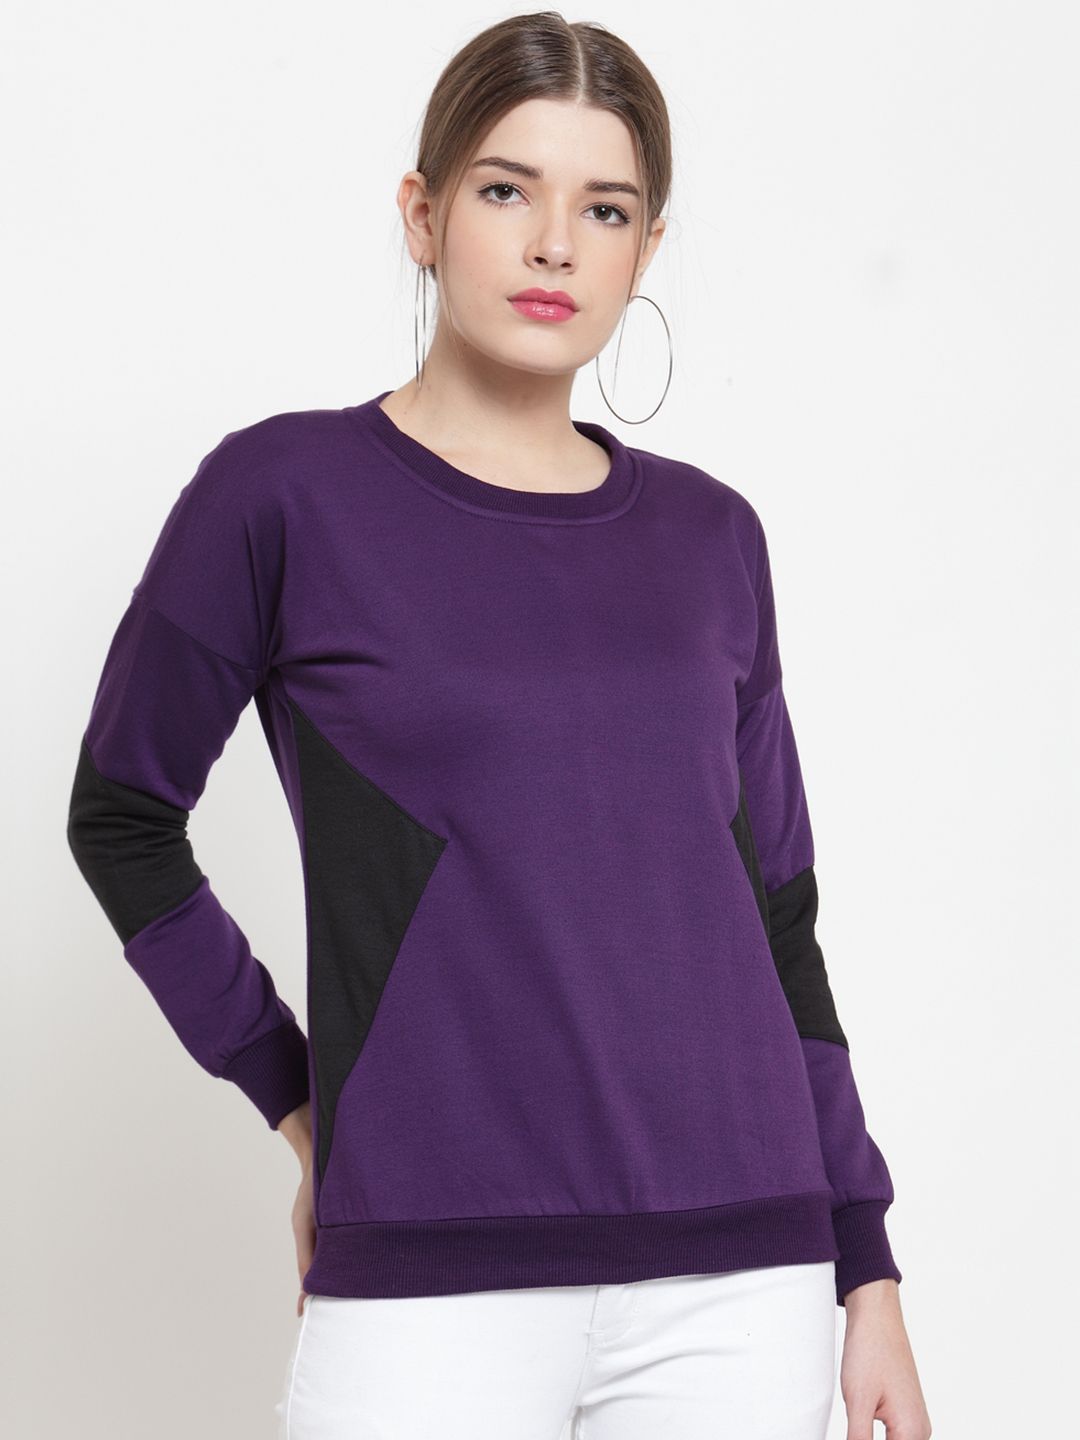 Belle Fille Women Purple & Black Colourblocked Sweatshirt Price in India